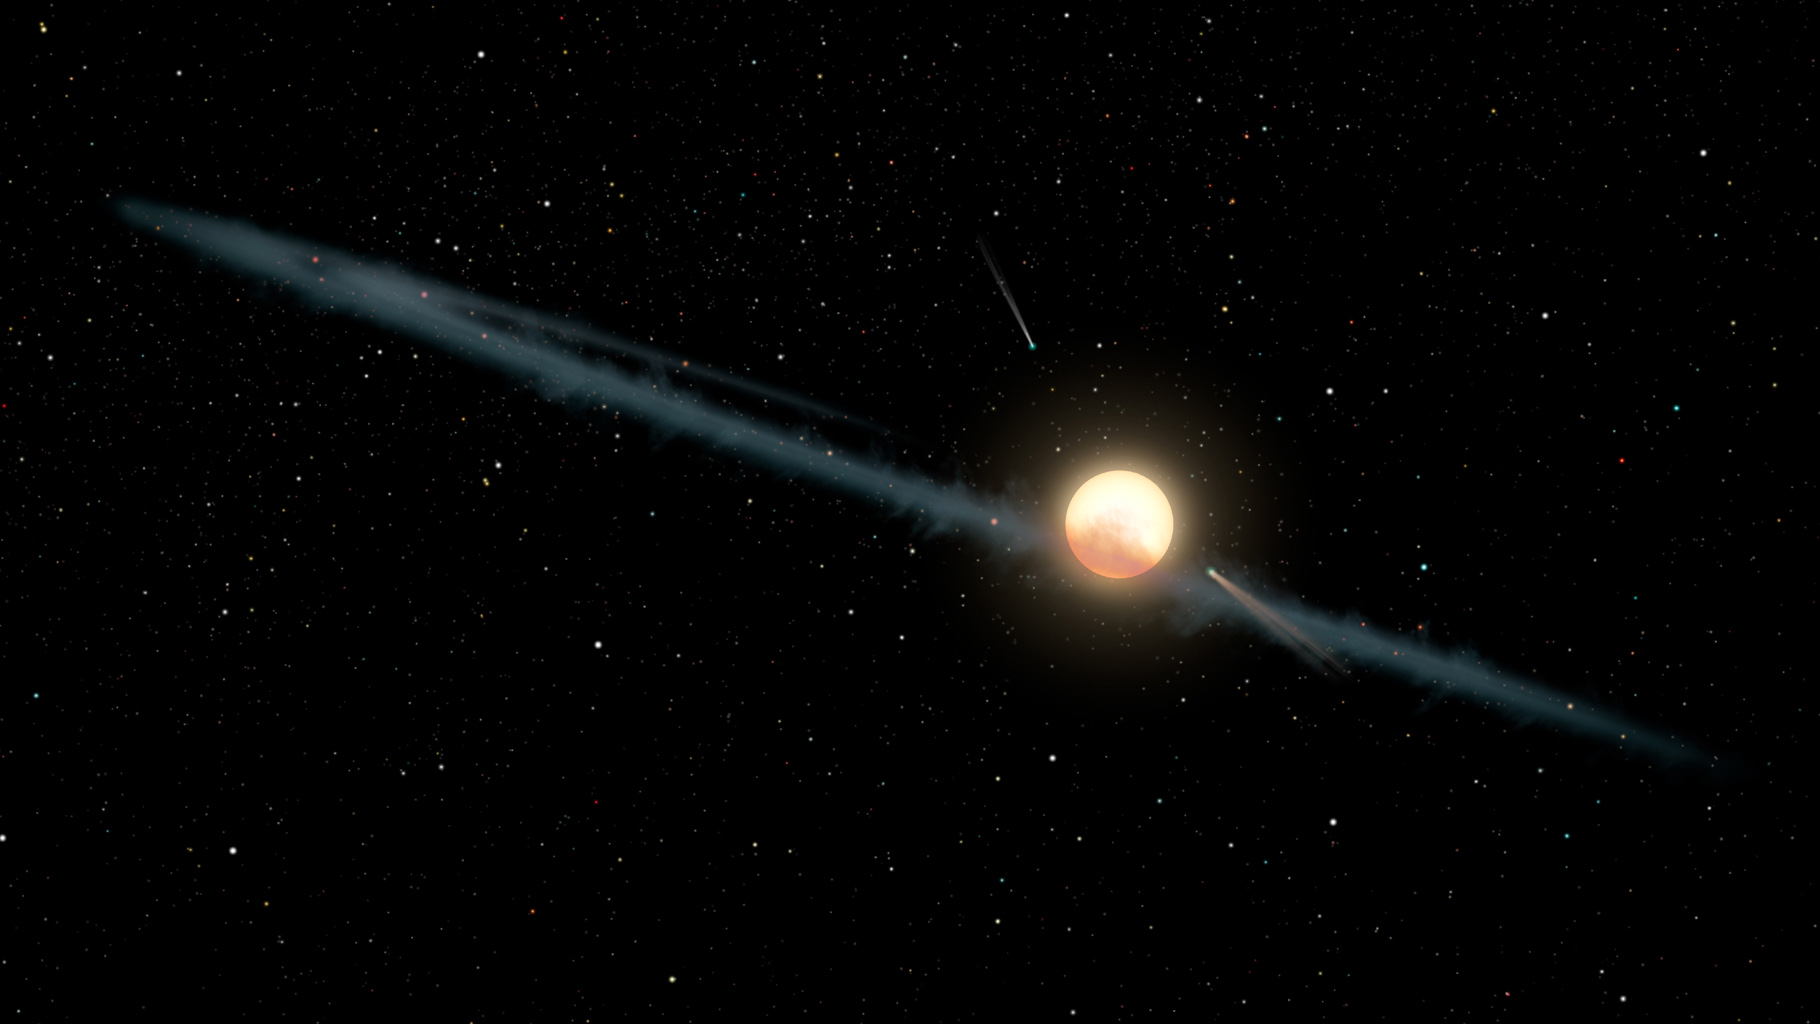 Ep. 552: Boyajian’s star (and other strange stars)